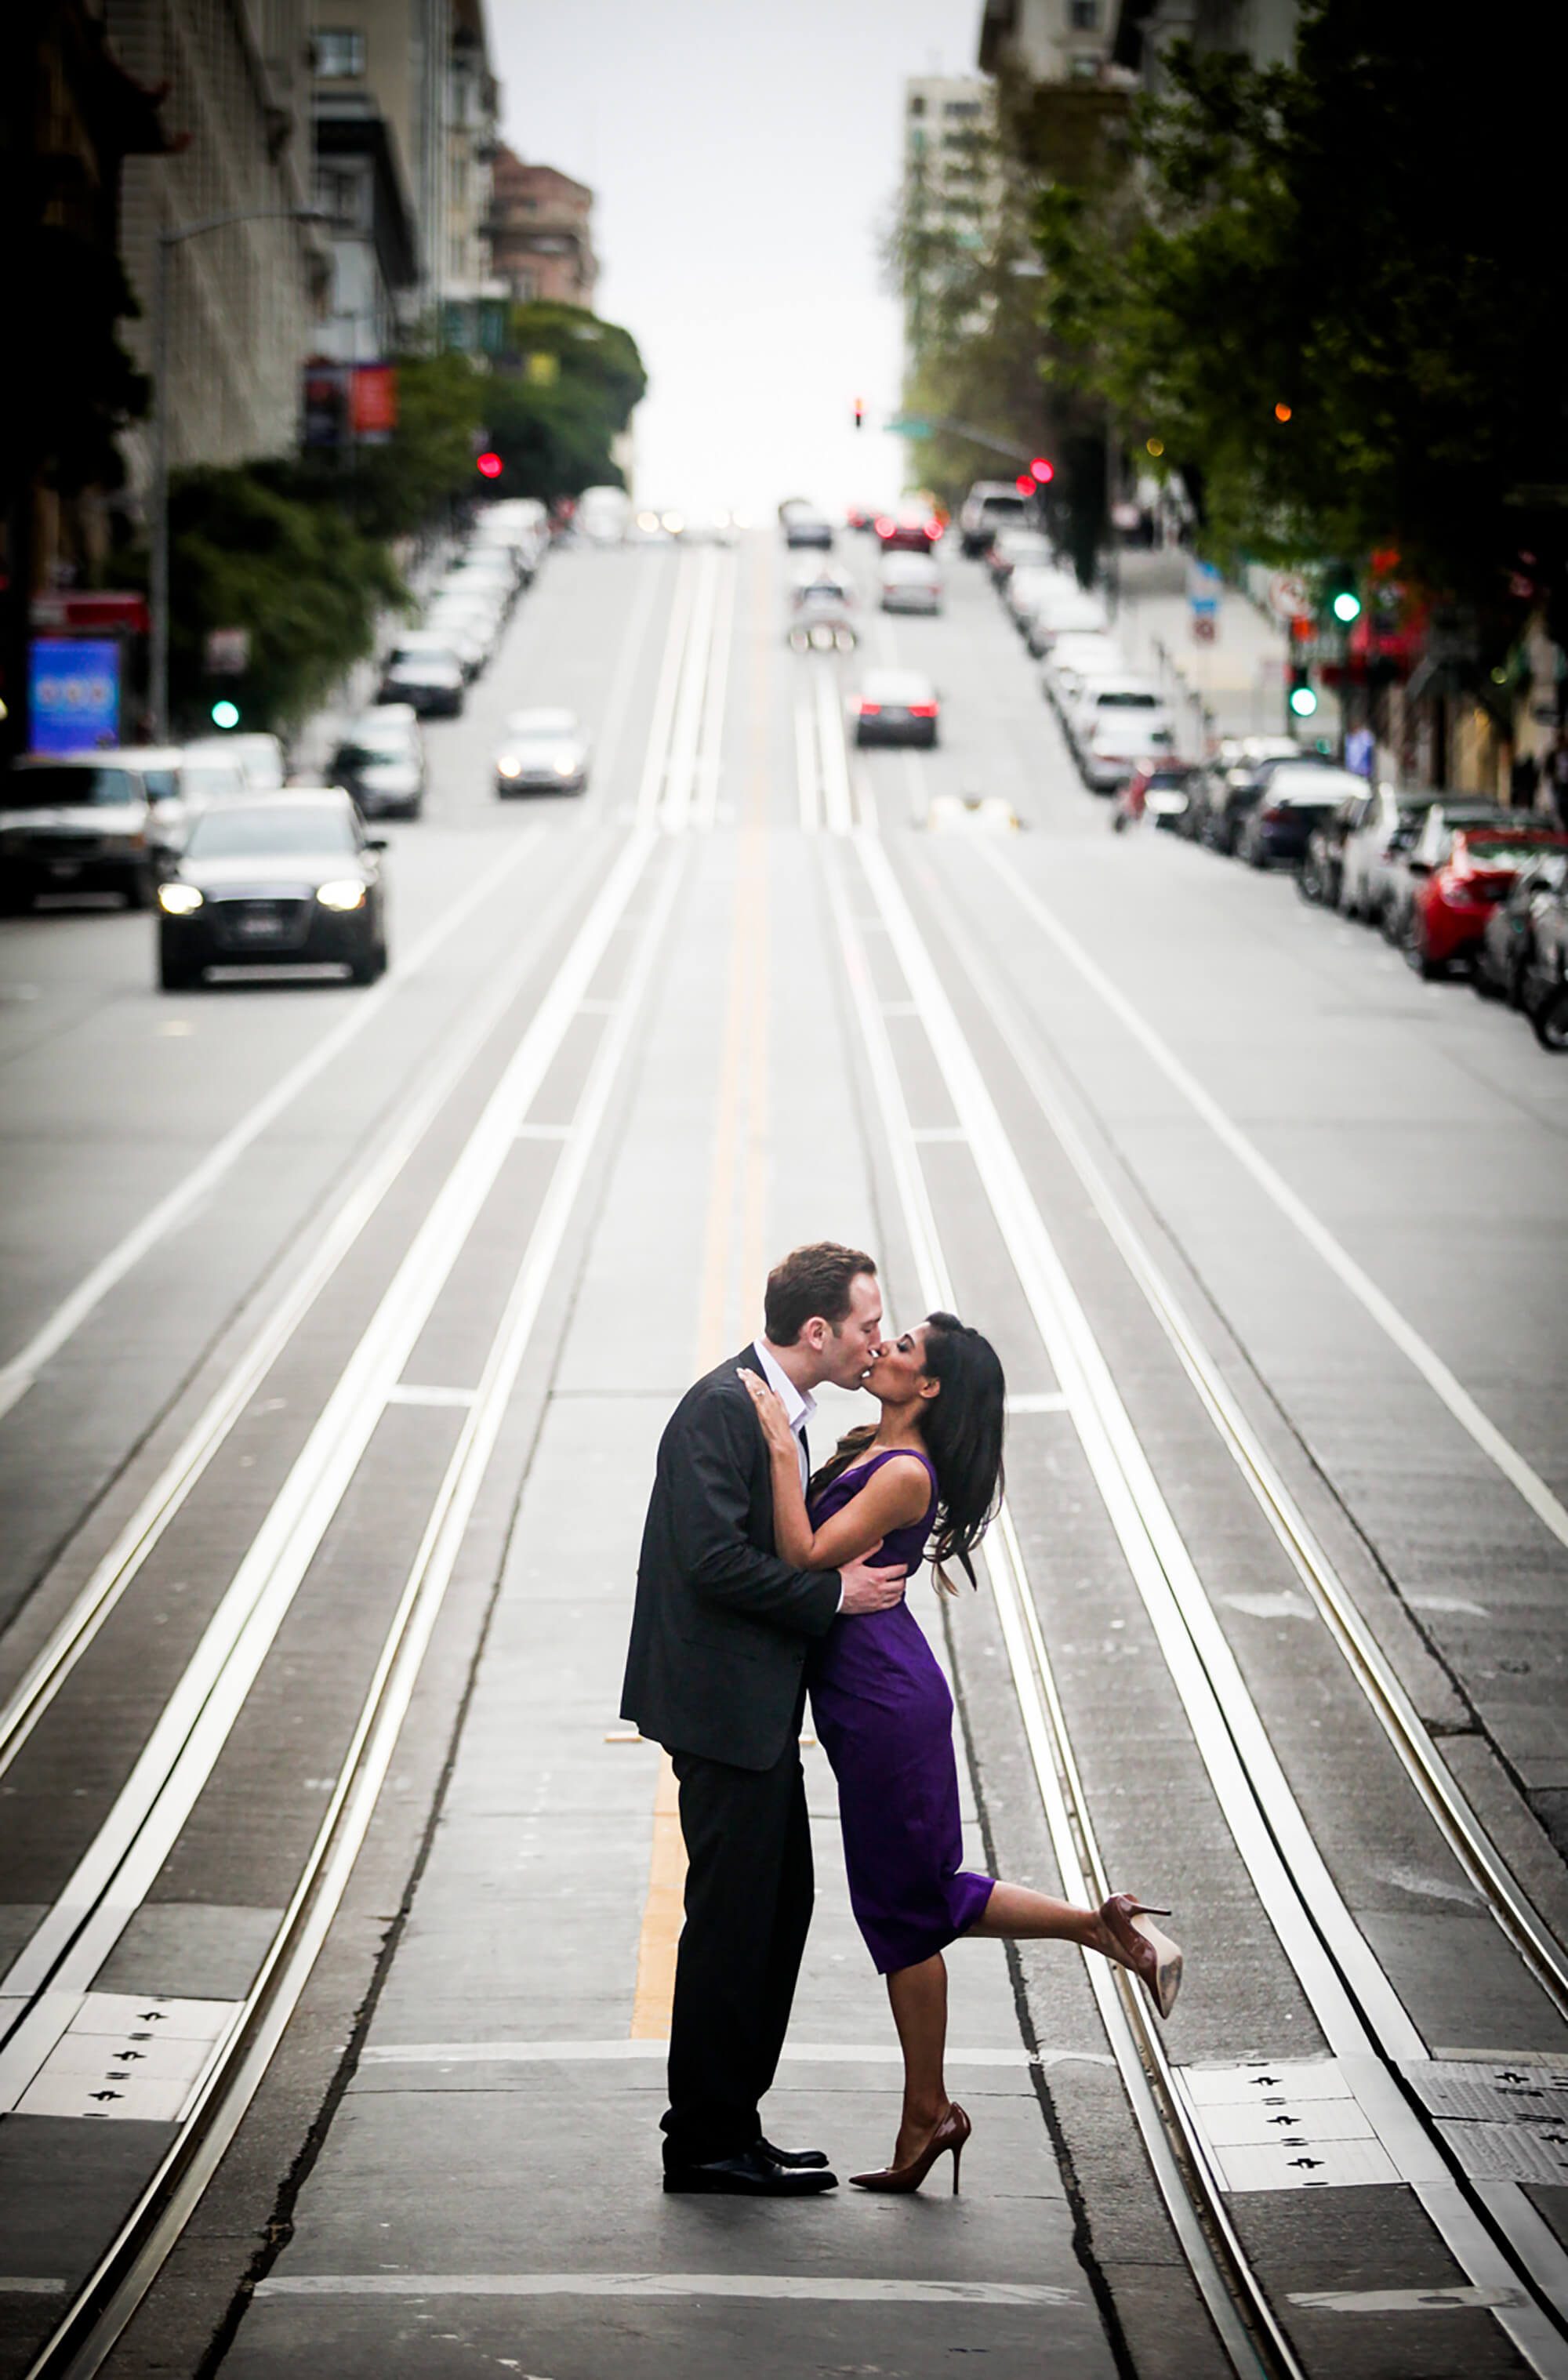 San Francisco engagement photographer - couple on city street